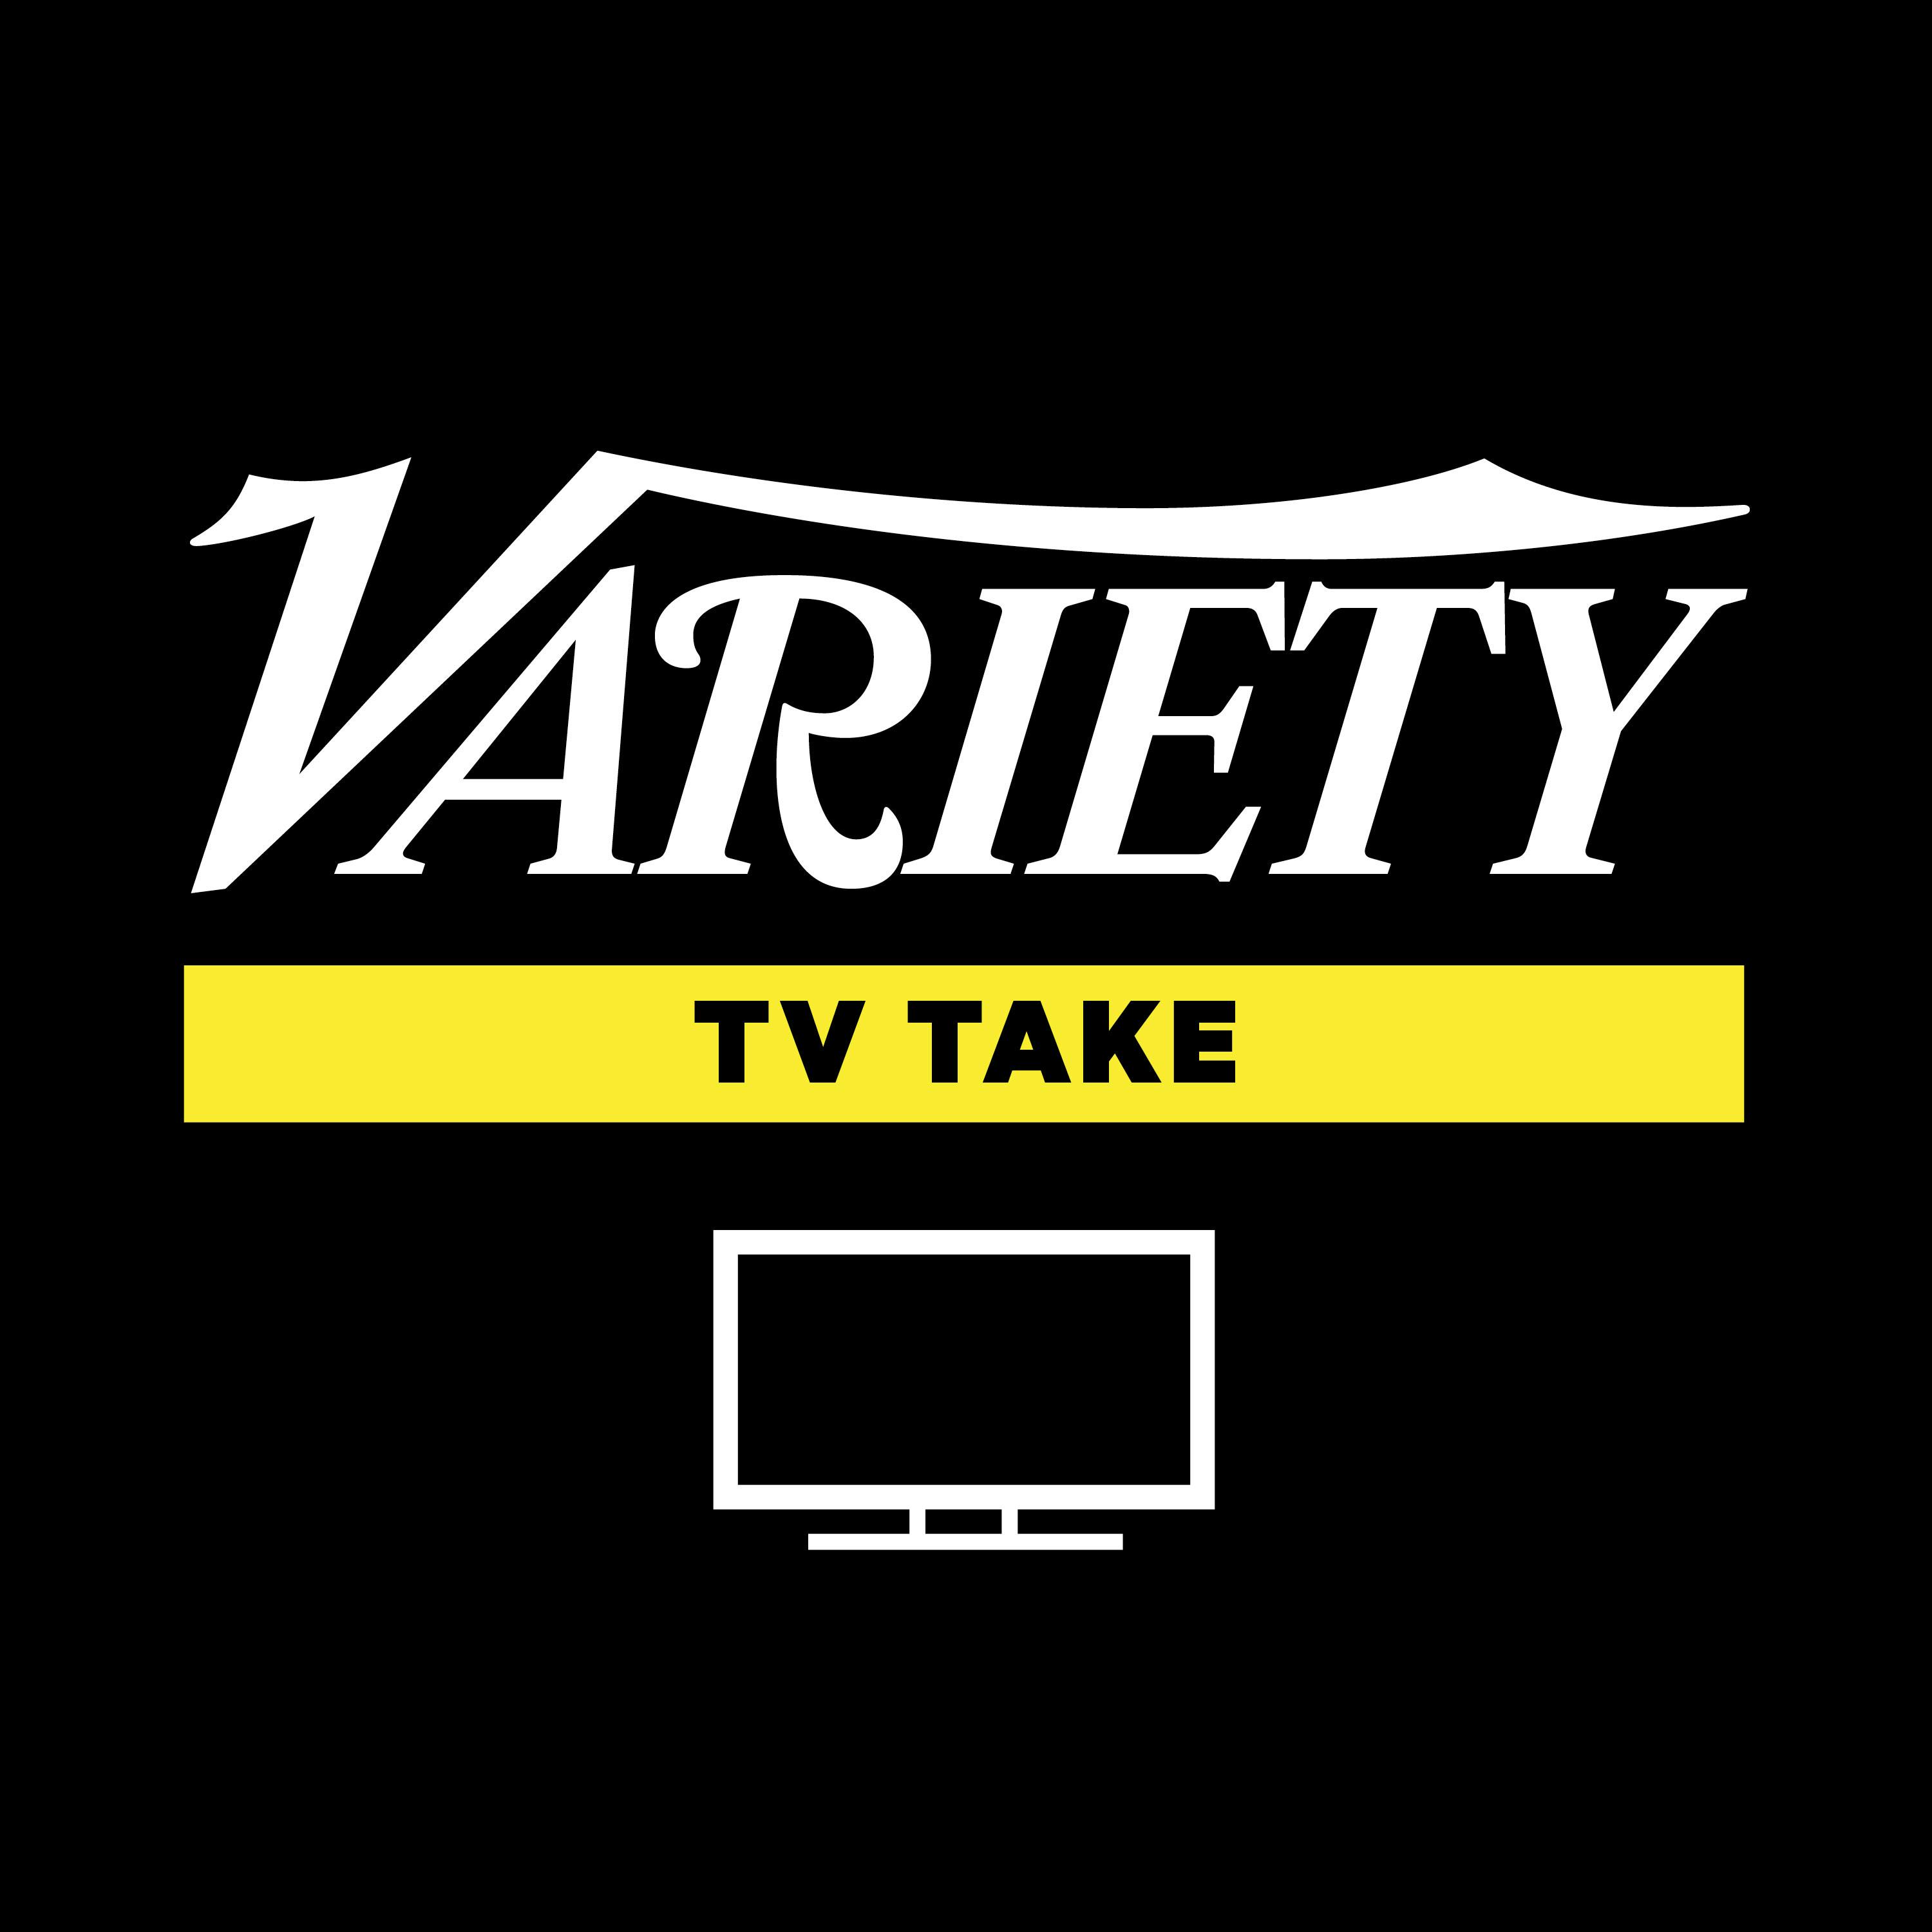 Ep59 - 'The Voice' Team Talks 'Lucky' Season 13